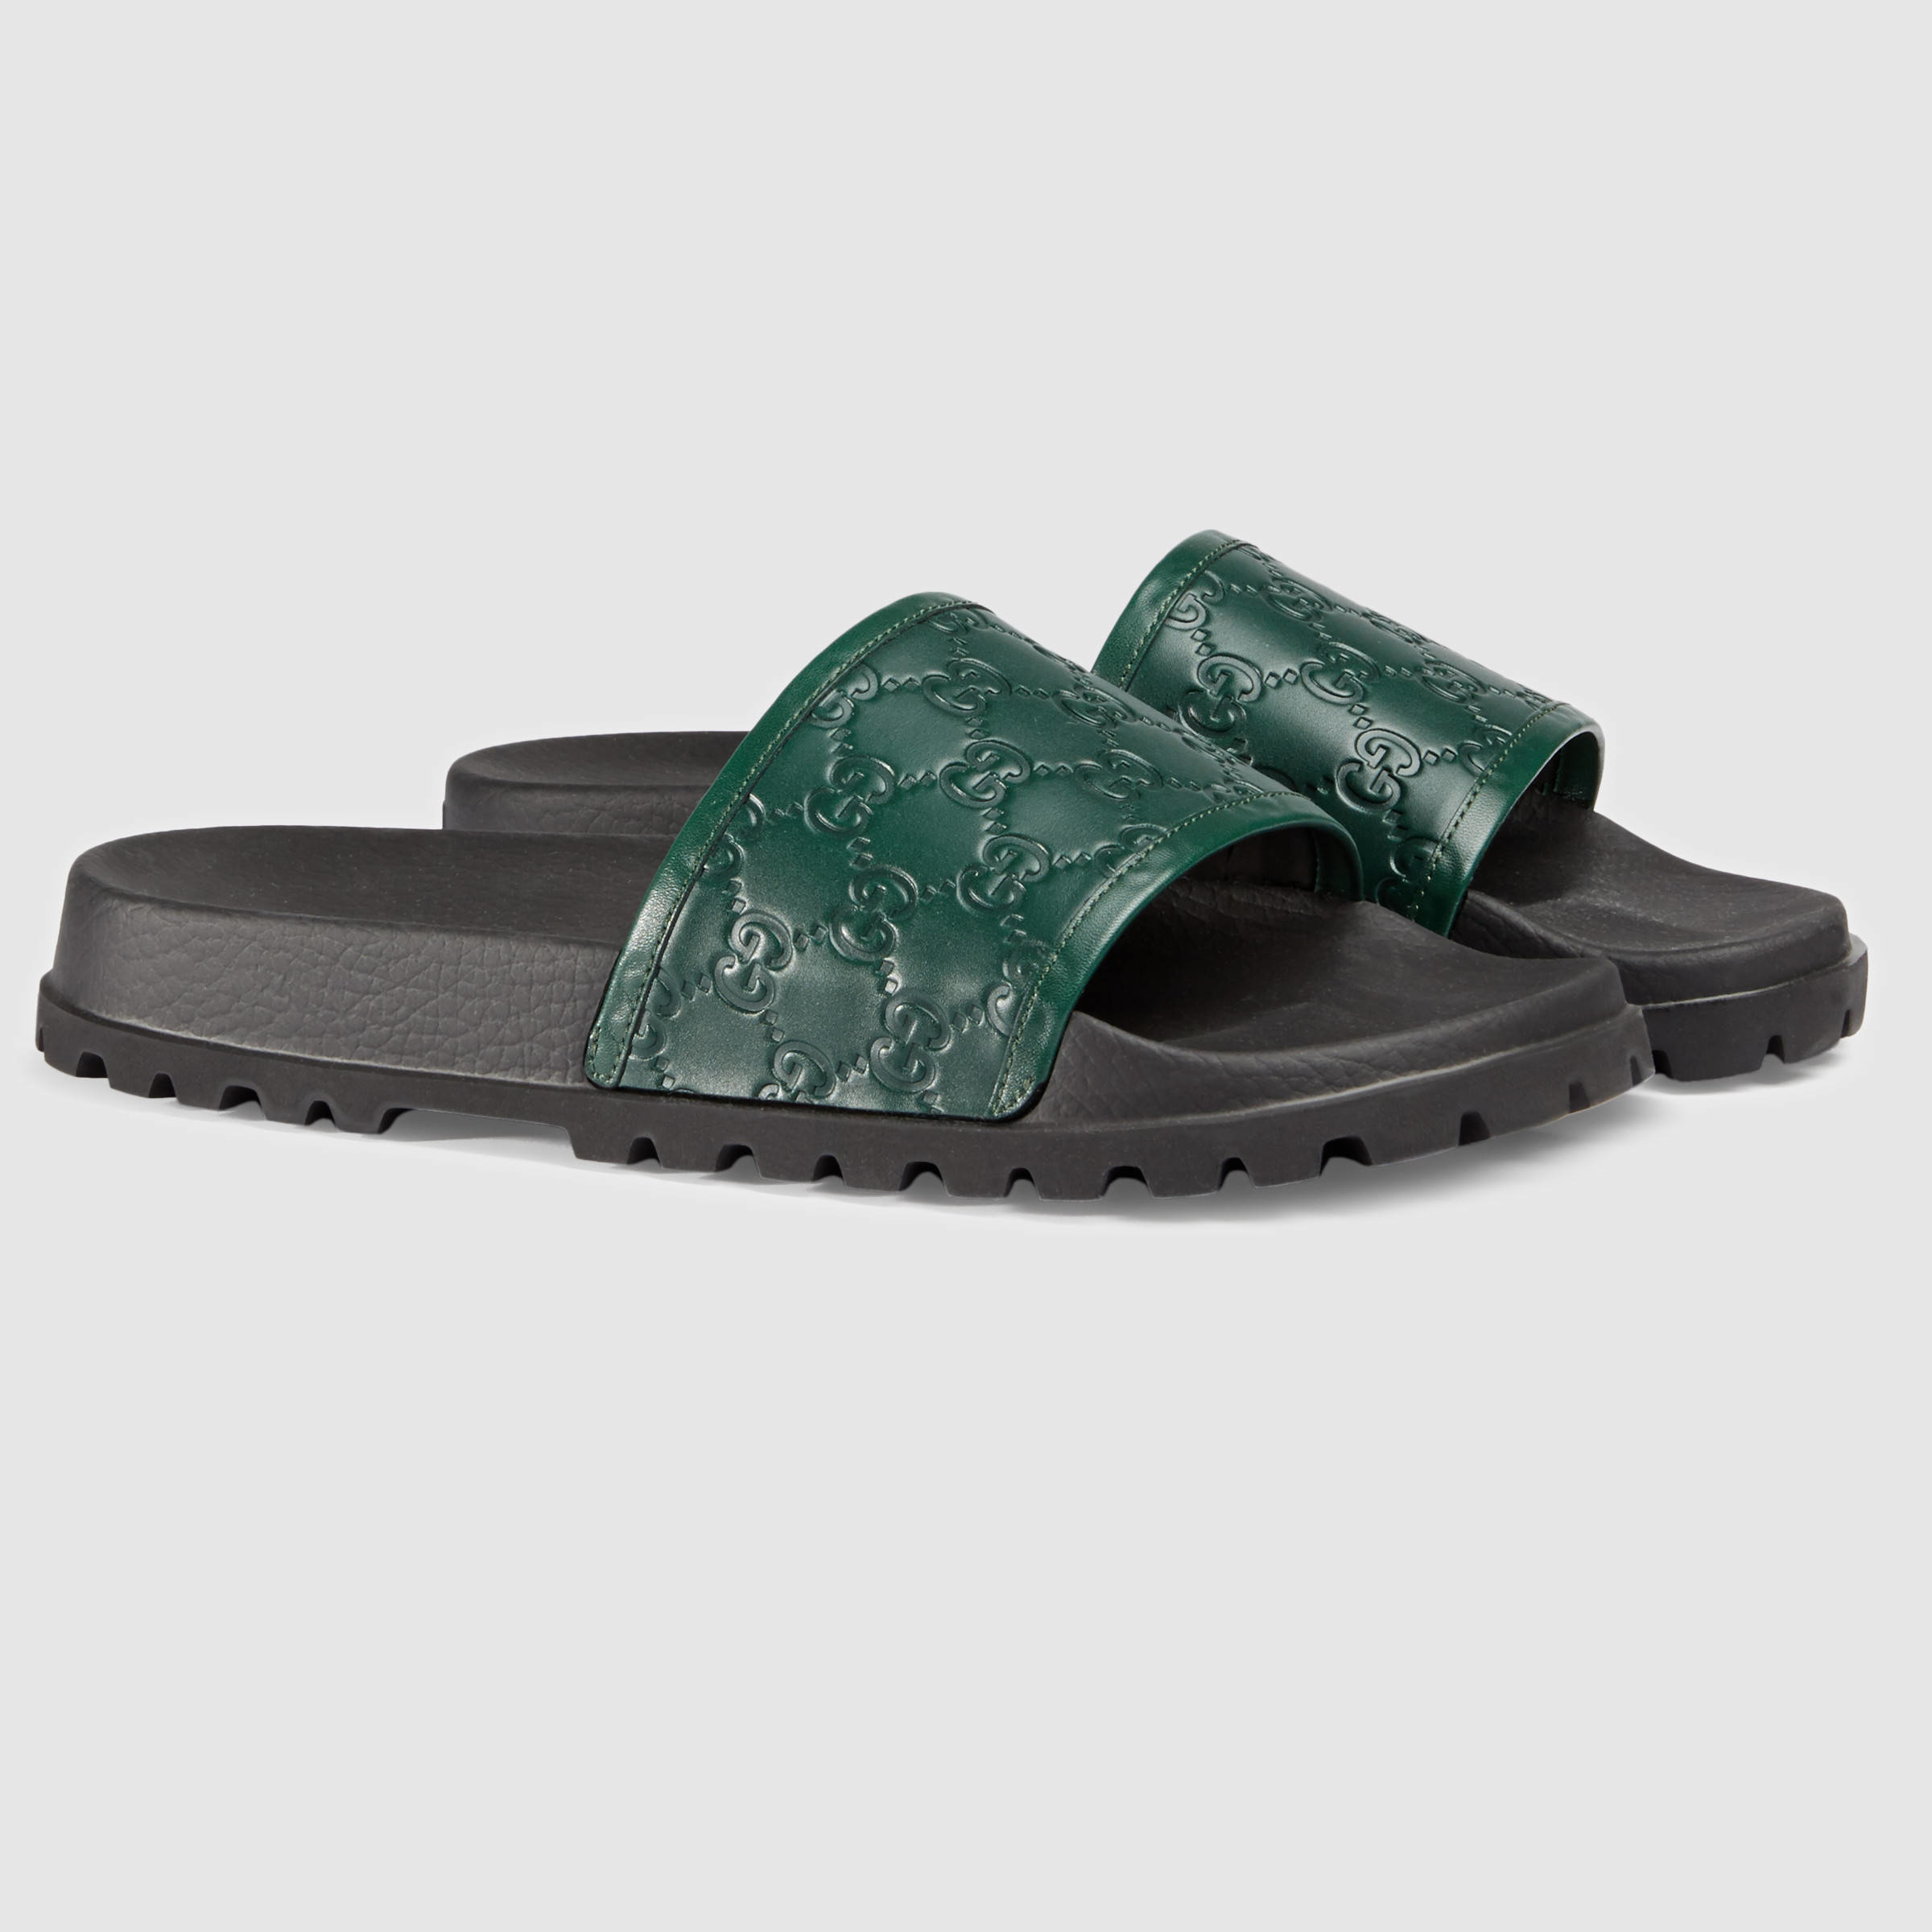 Lyst - Gucci Signature Slide Sandal in Green for Men